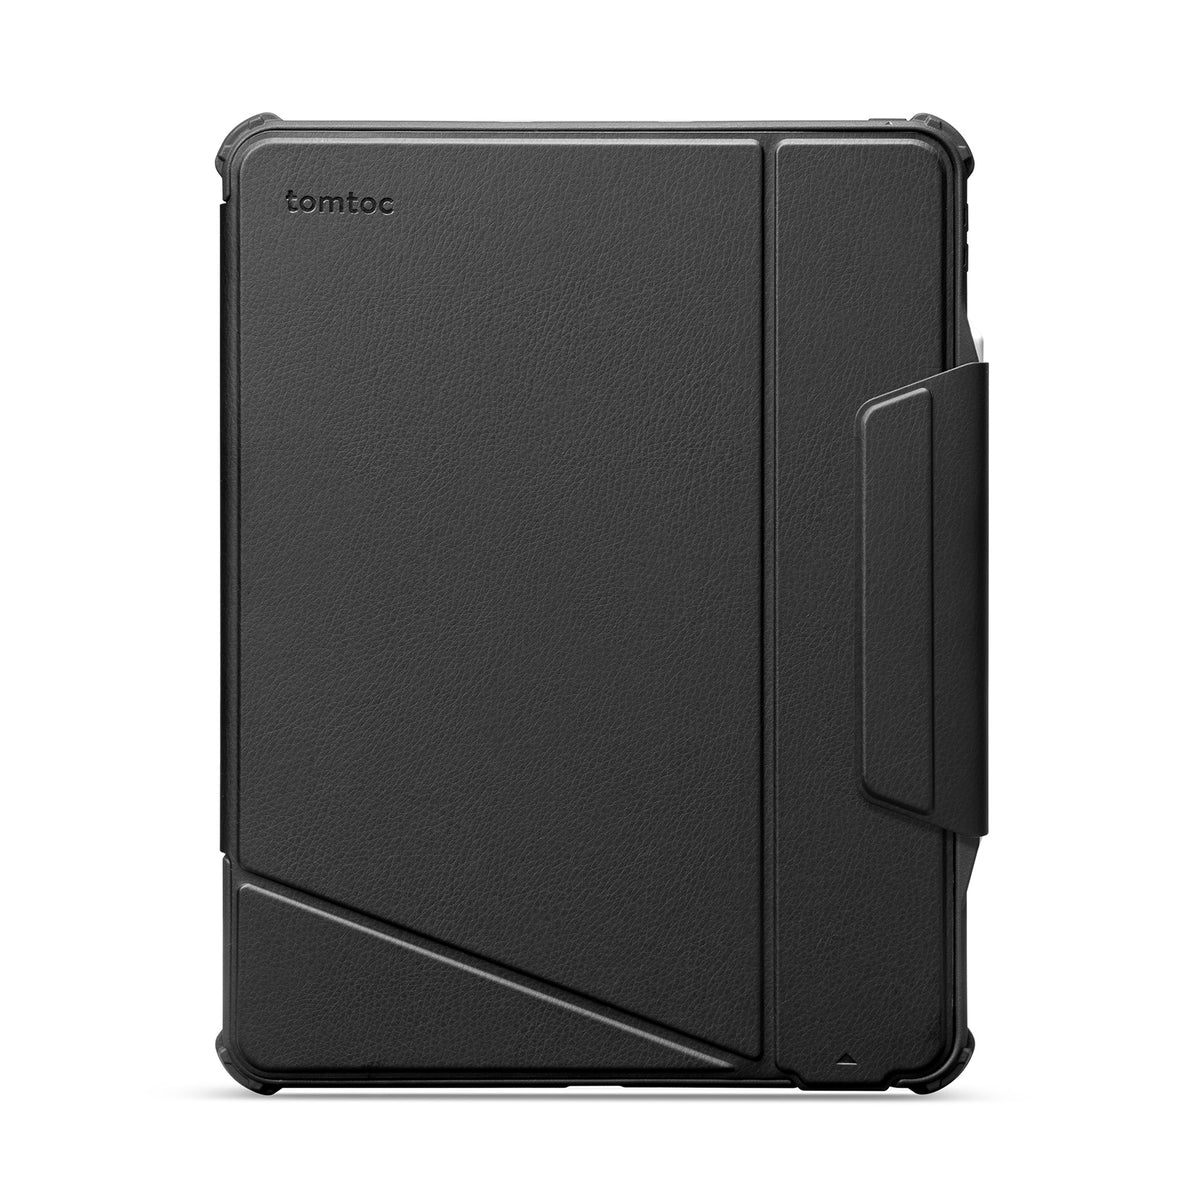 tomtoc 12.9 Inch iPad Pro Detachable Protective Case - Leather Black